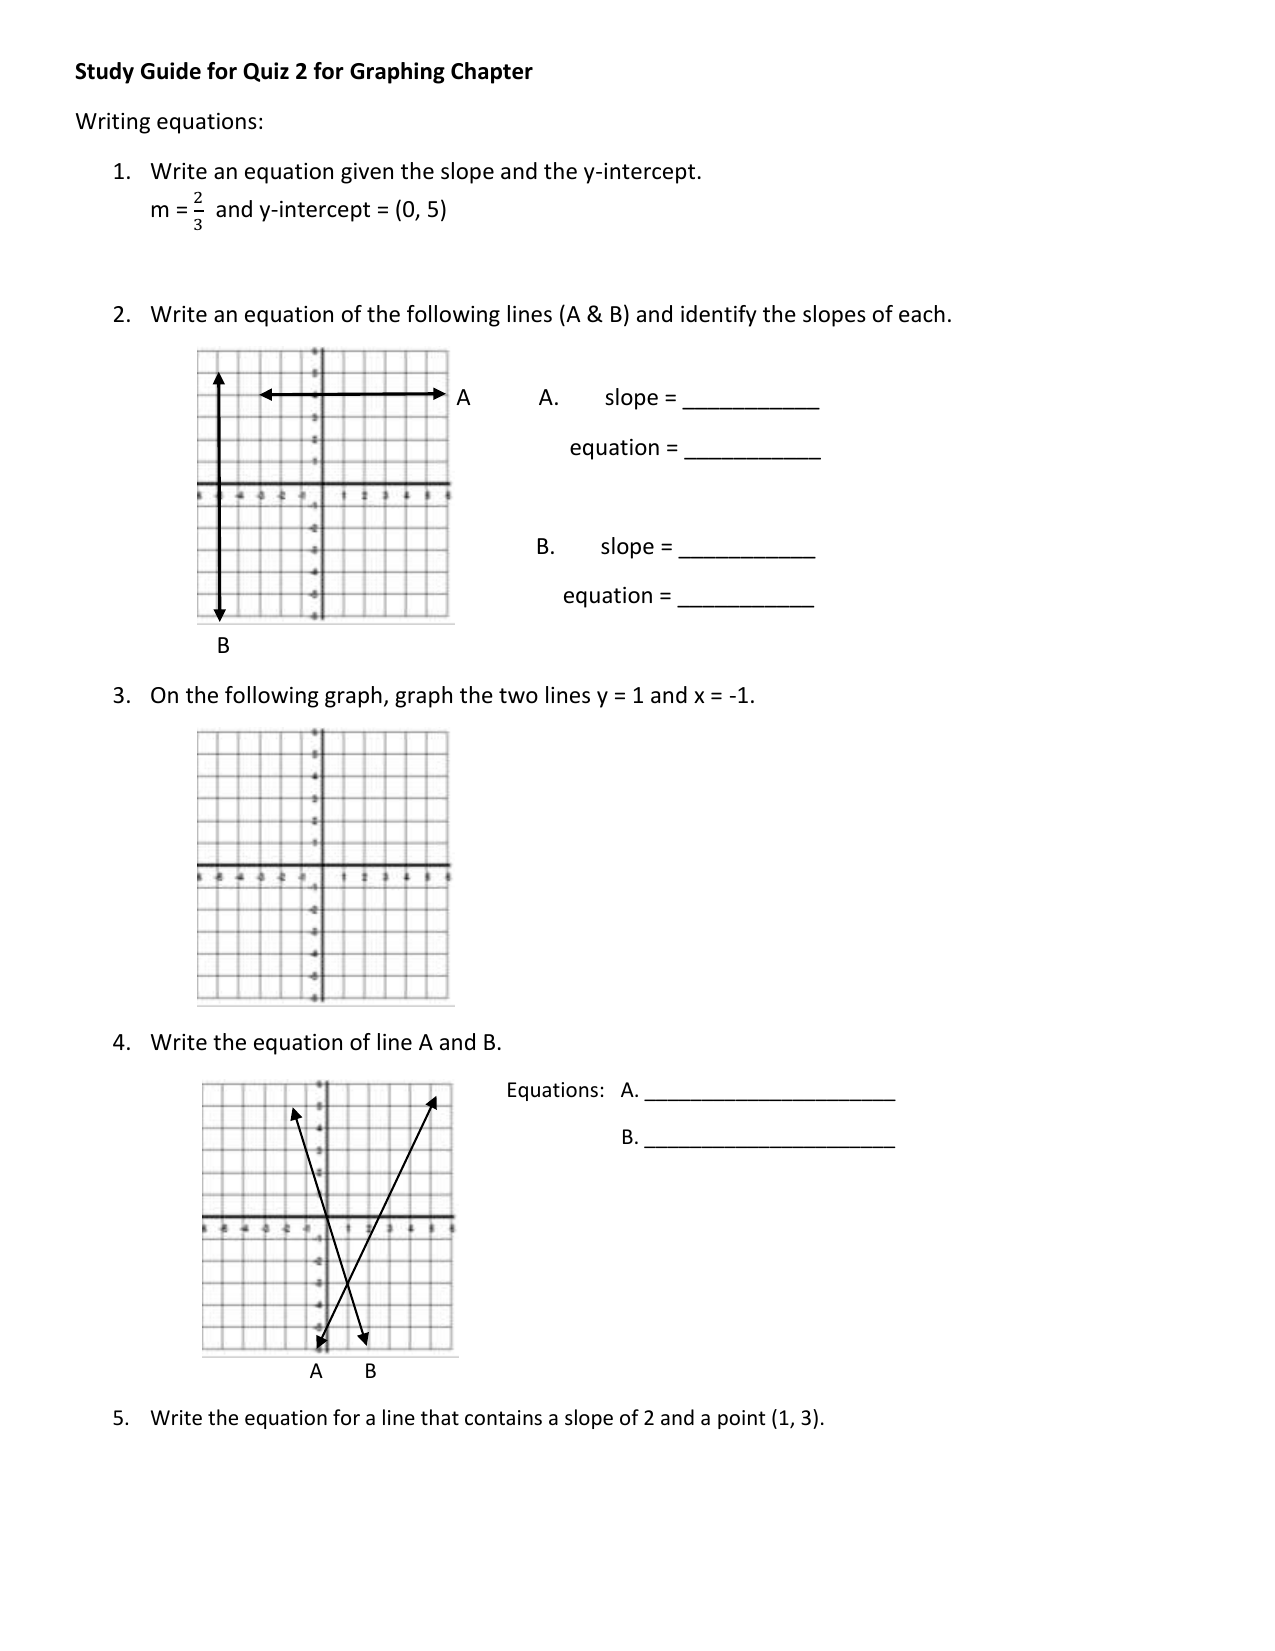 assignment 11 quiz 2 equations of a line